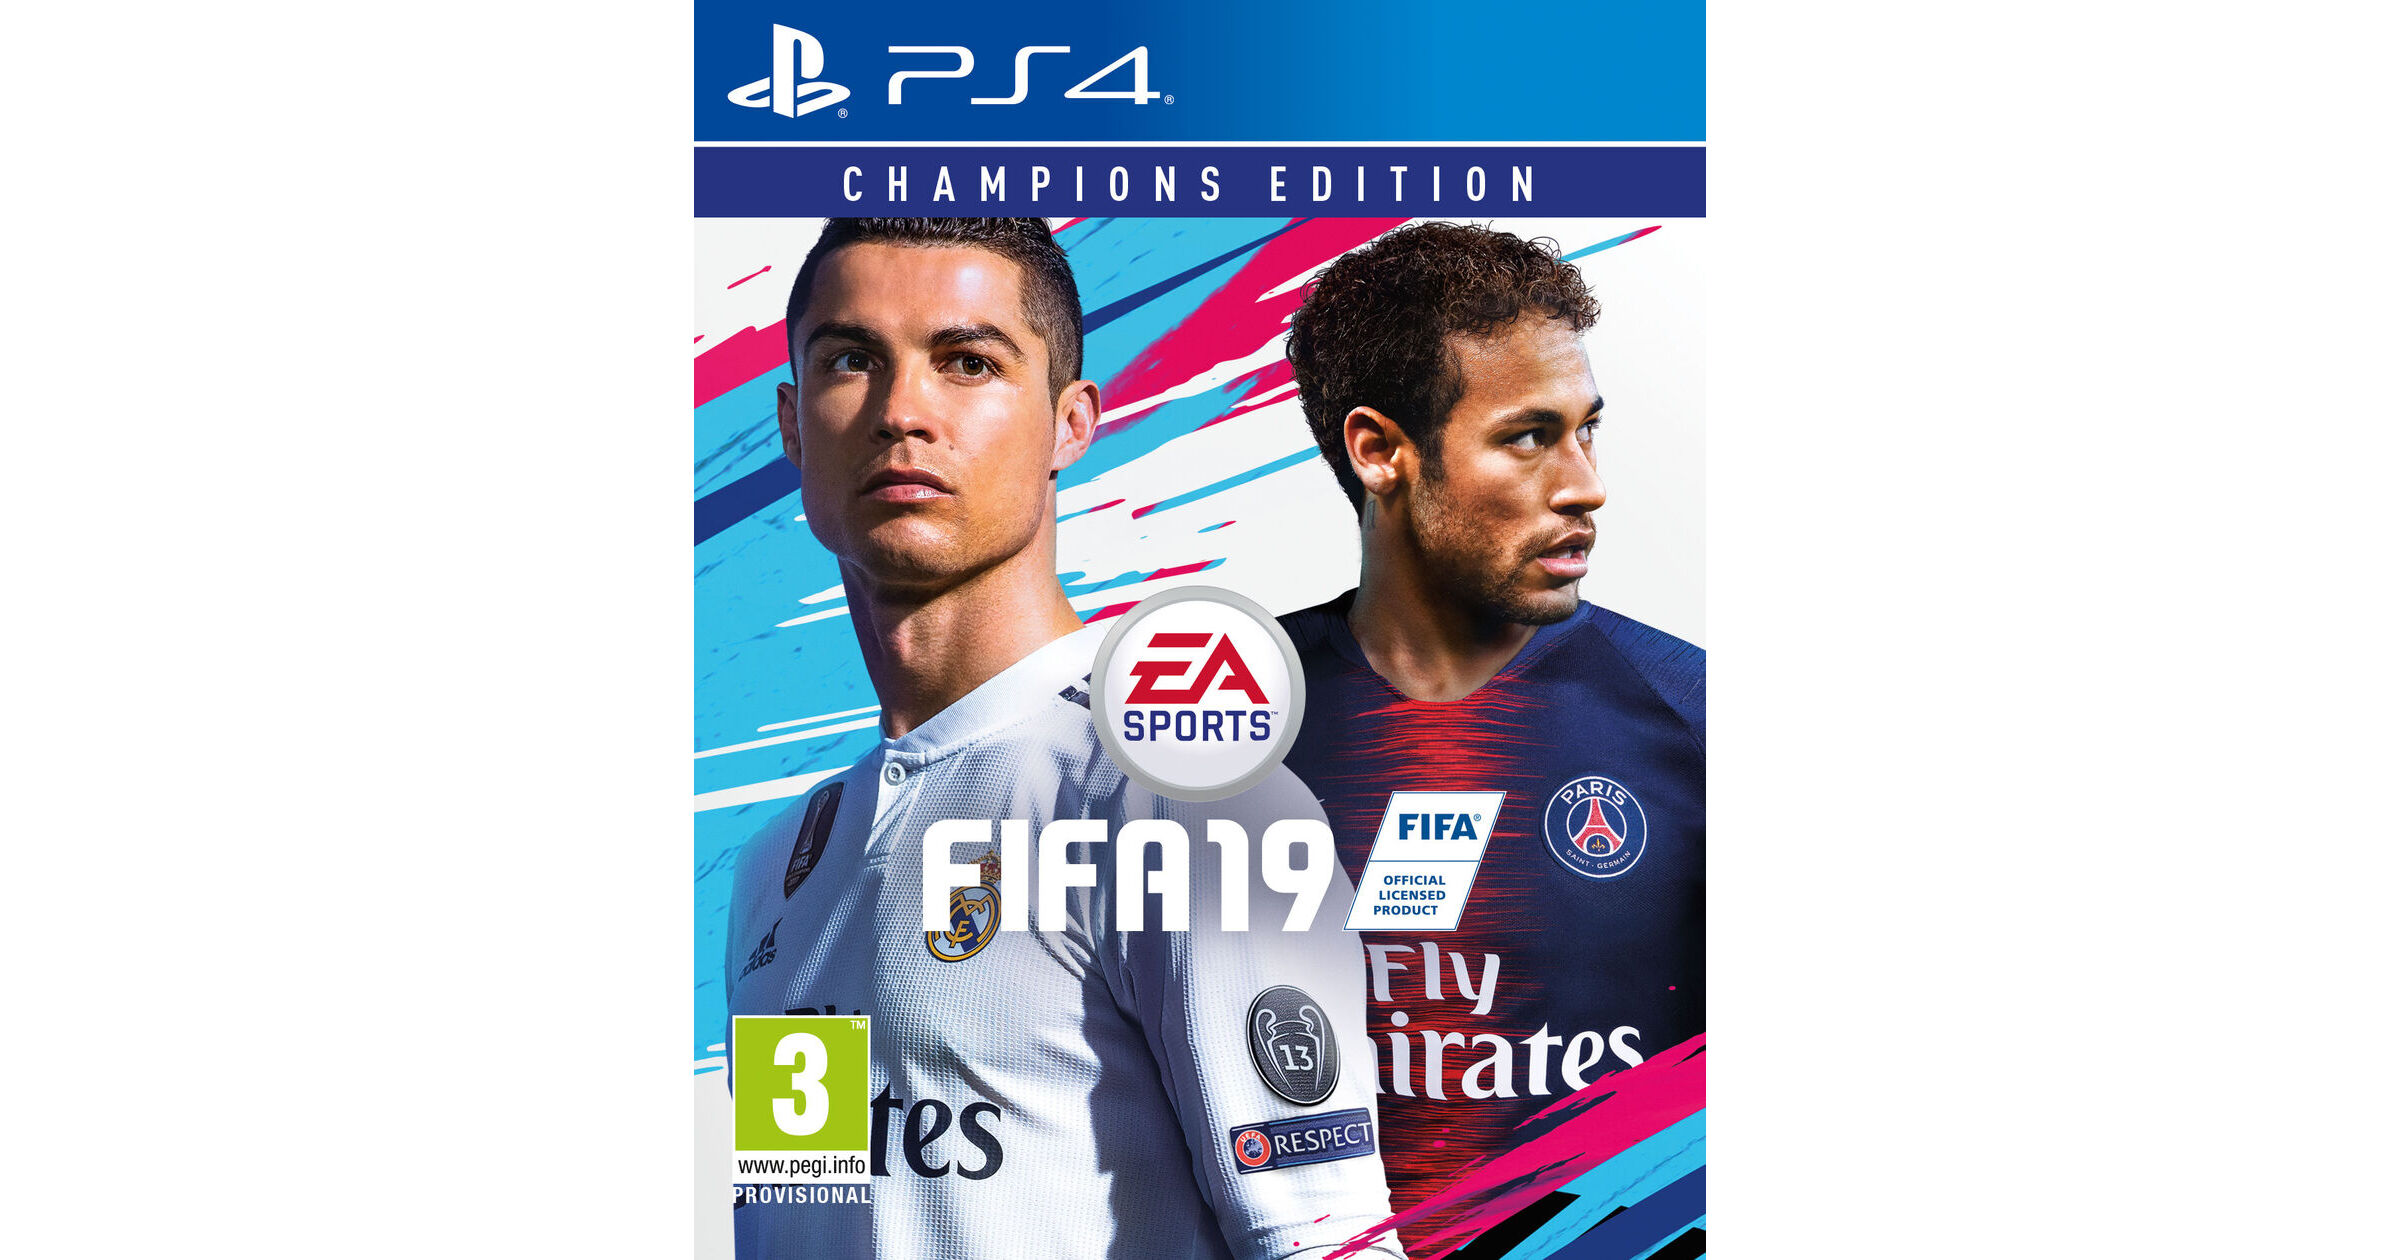 FIFA Champions Edition PlayStation